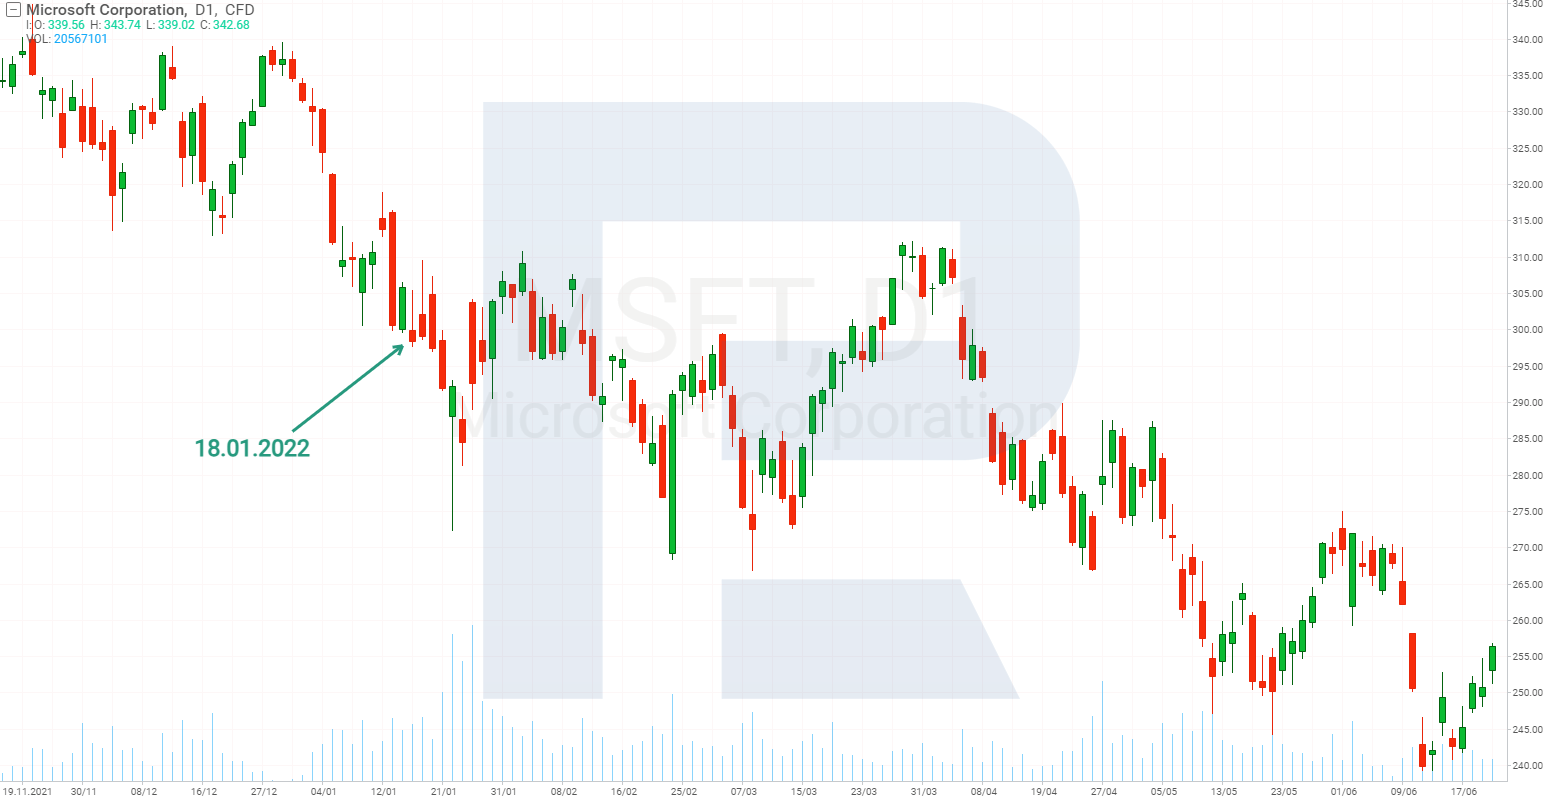 Microsoft Corporation’s stock chart